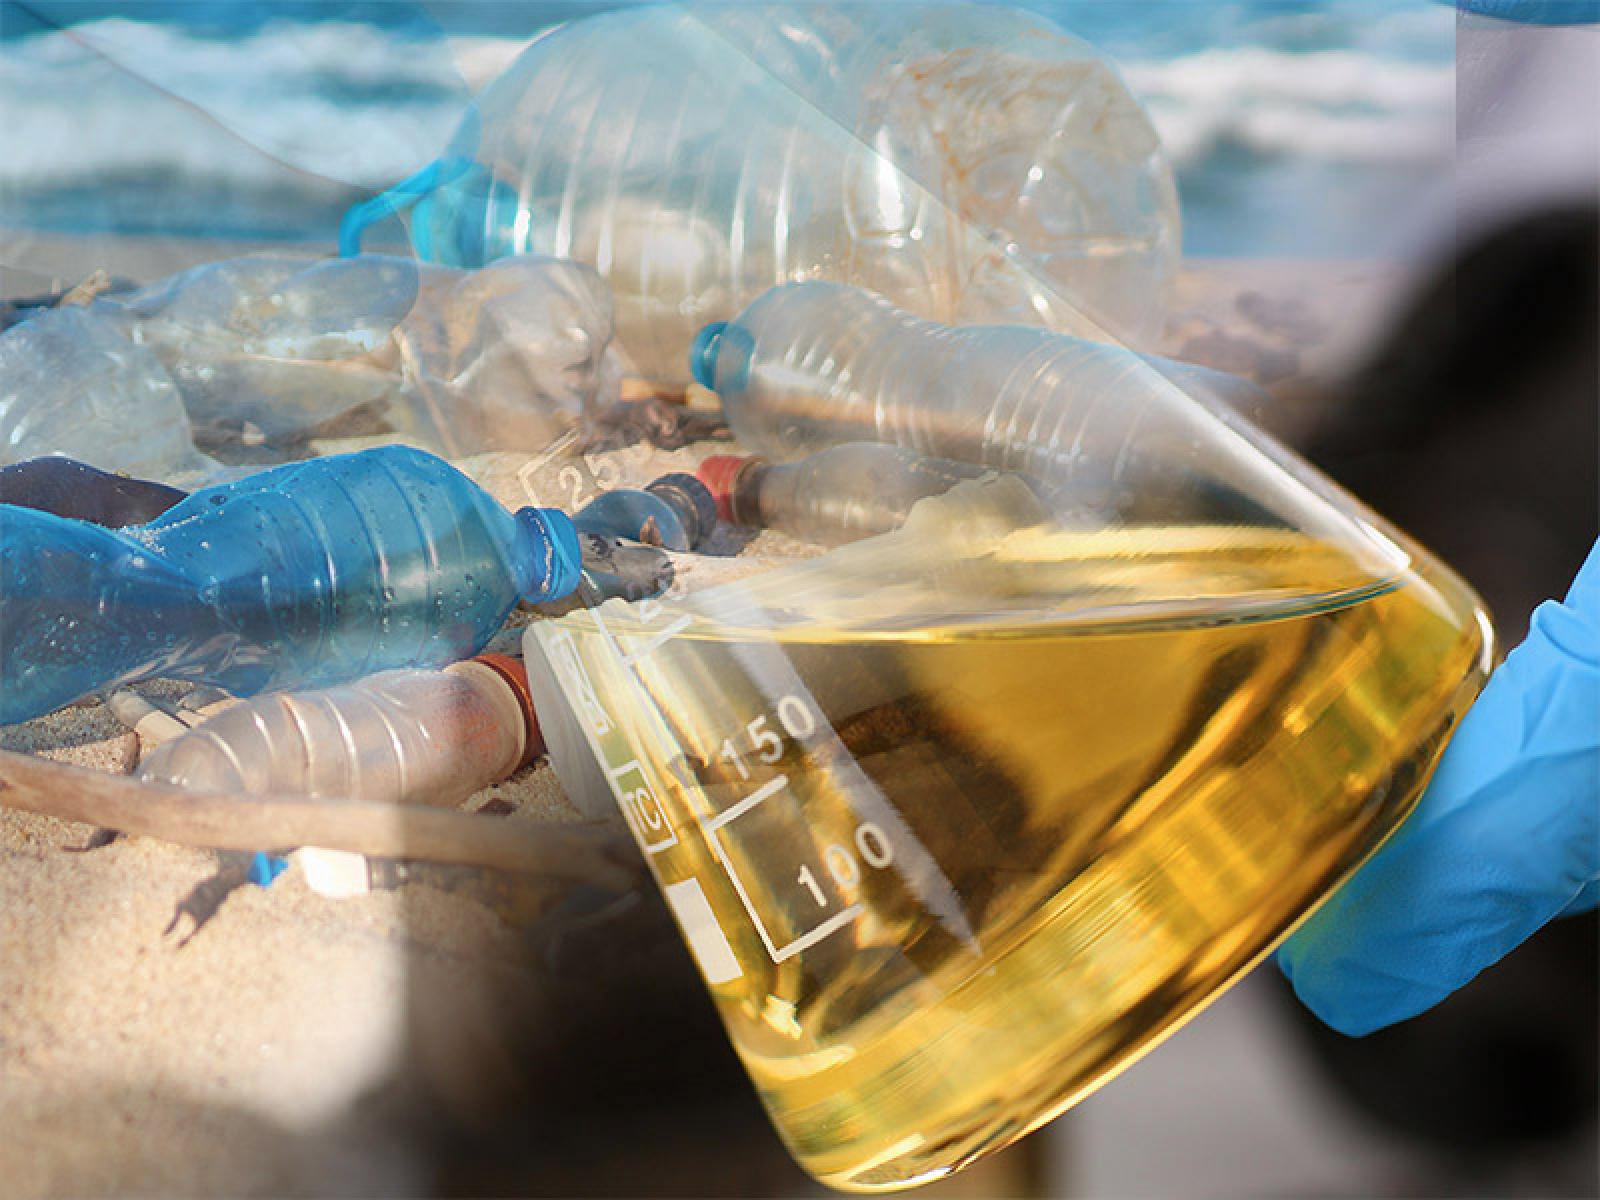 plastic upcycling image showing plastics turning into fuel